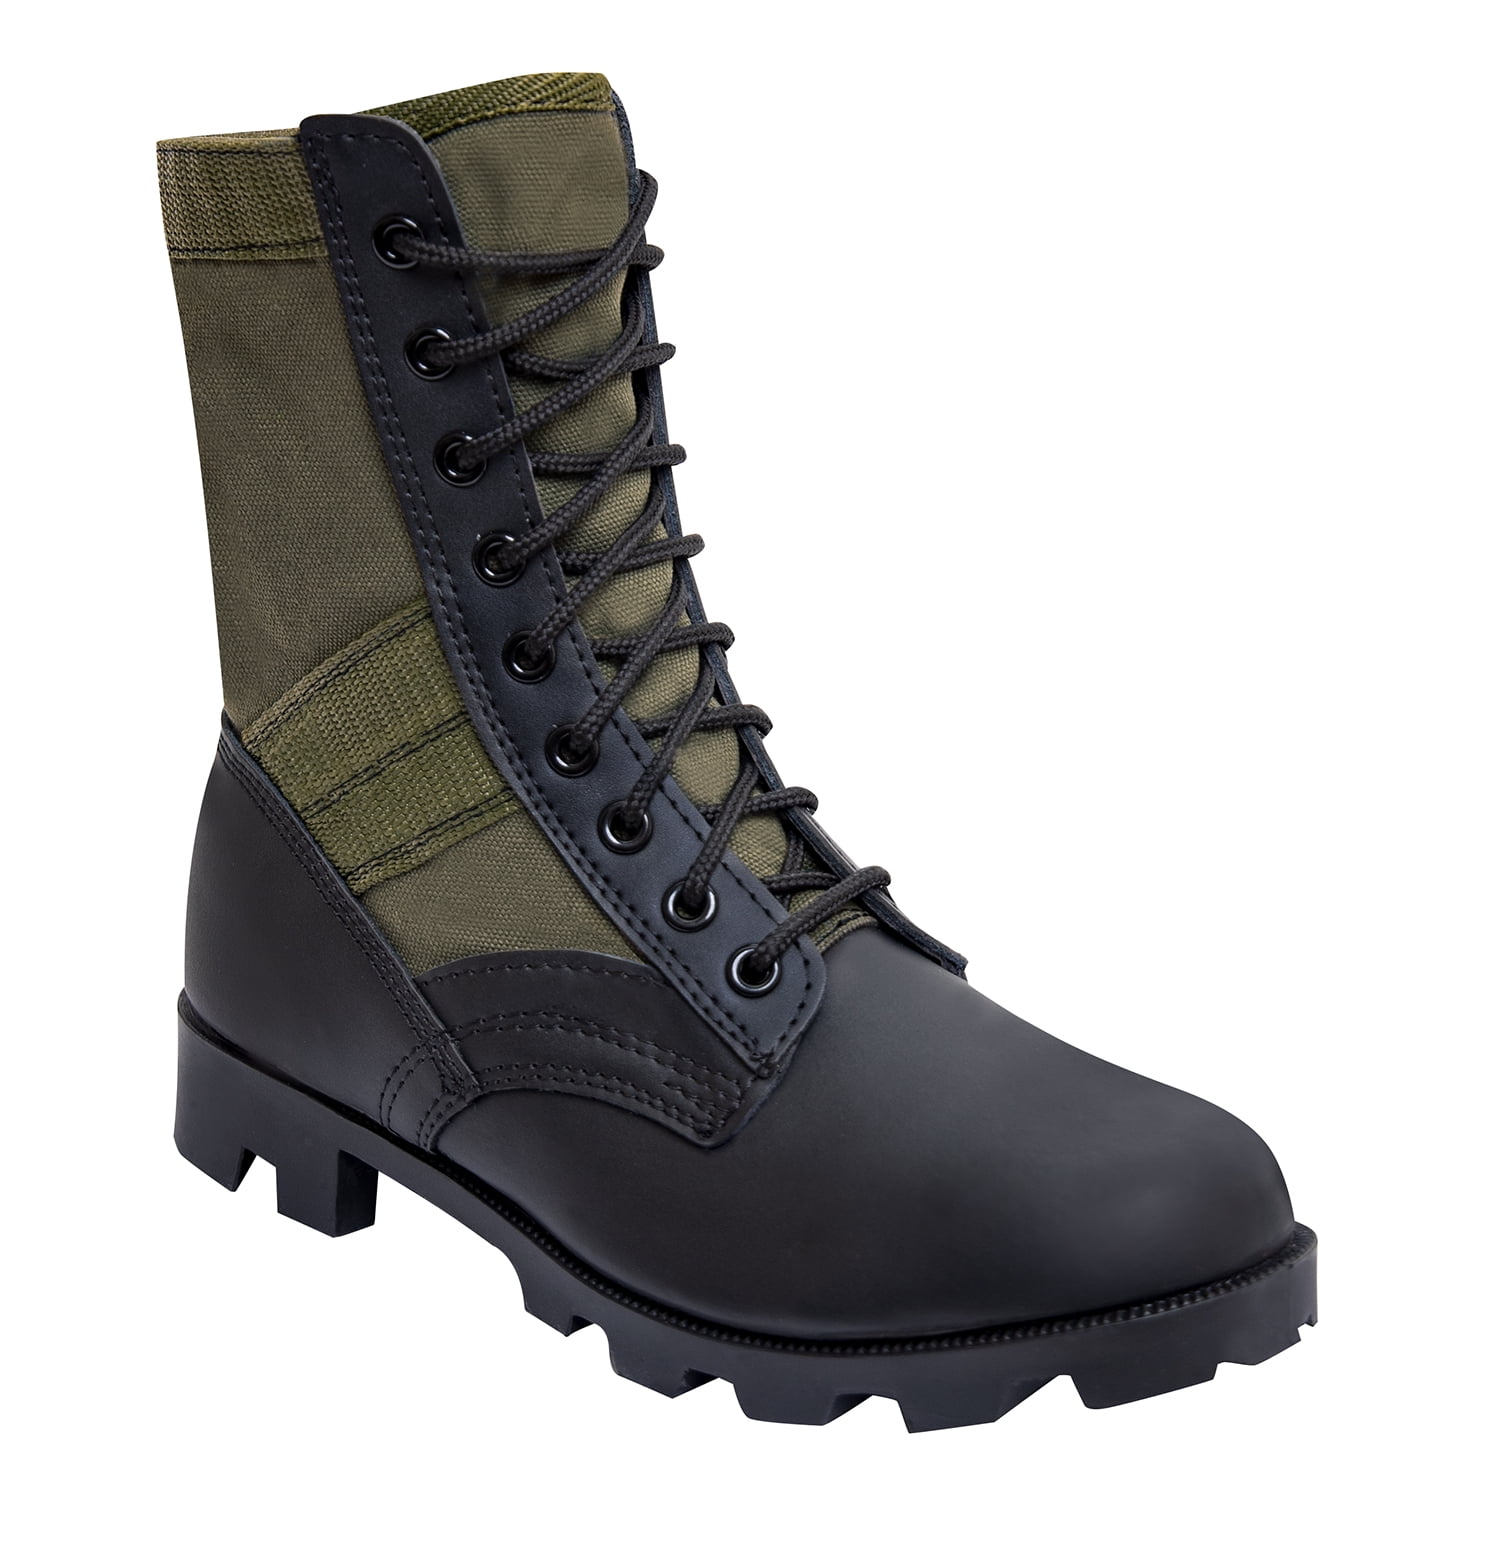 Rothco Jungle Boots - 8 Inch, Regular, Olive Drab, 2 - Walmart.com